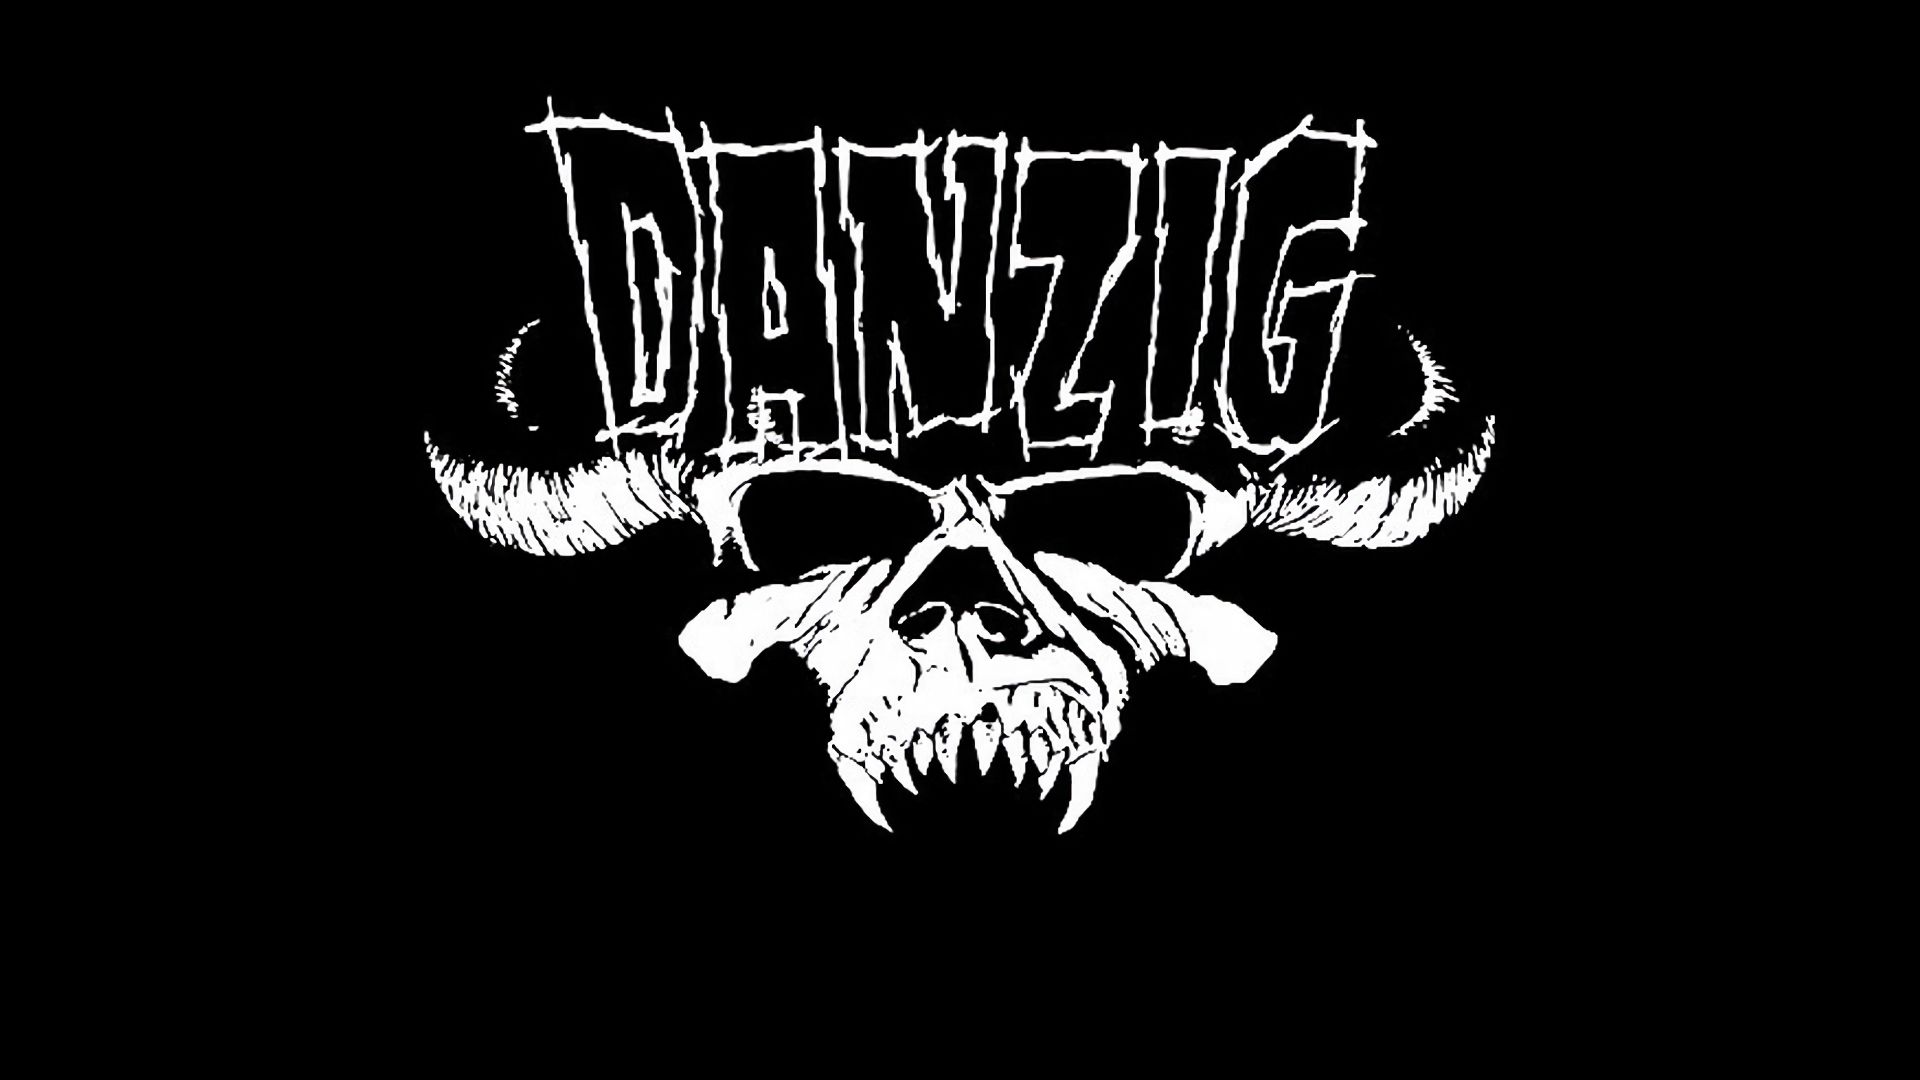 Popular Danzig Image for Phone